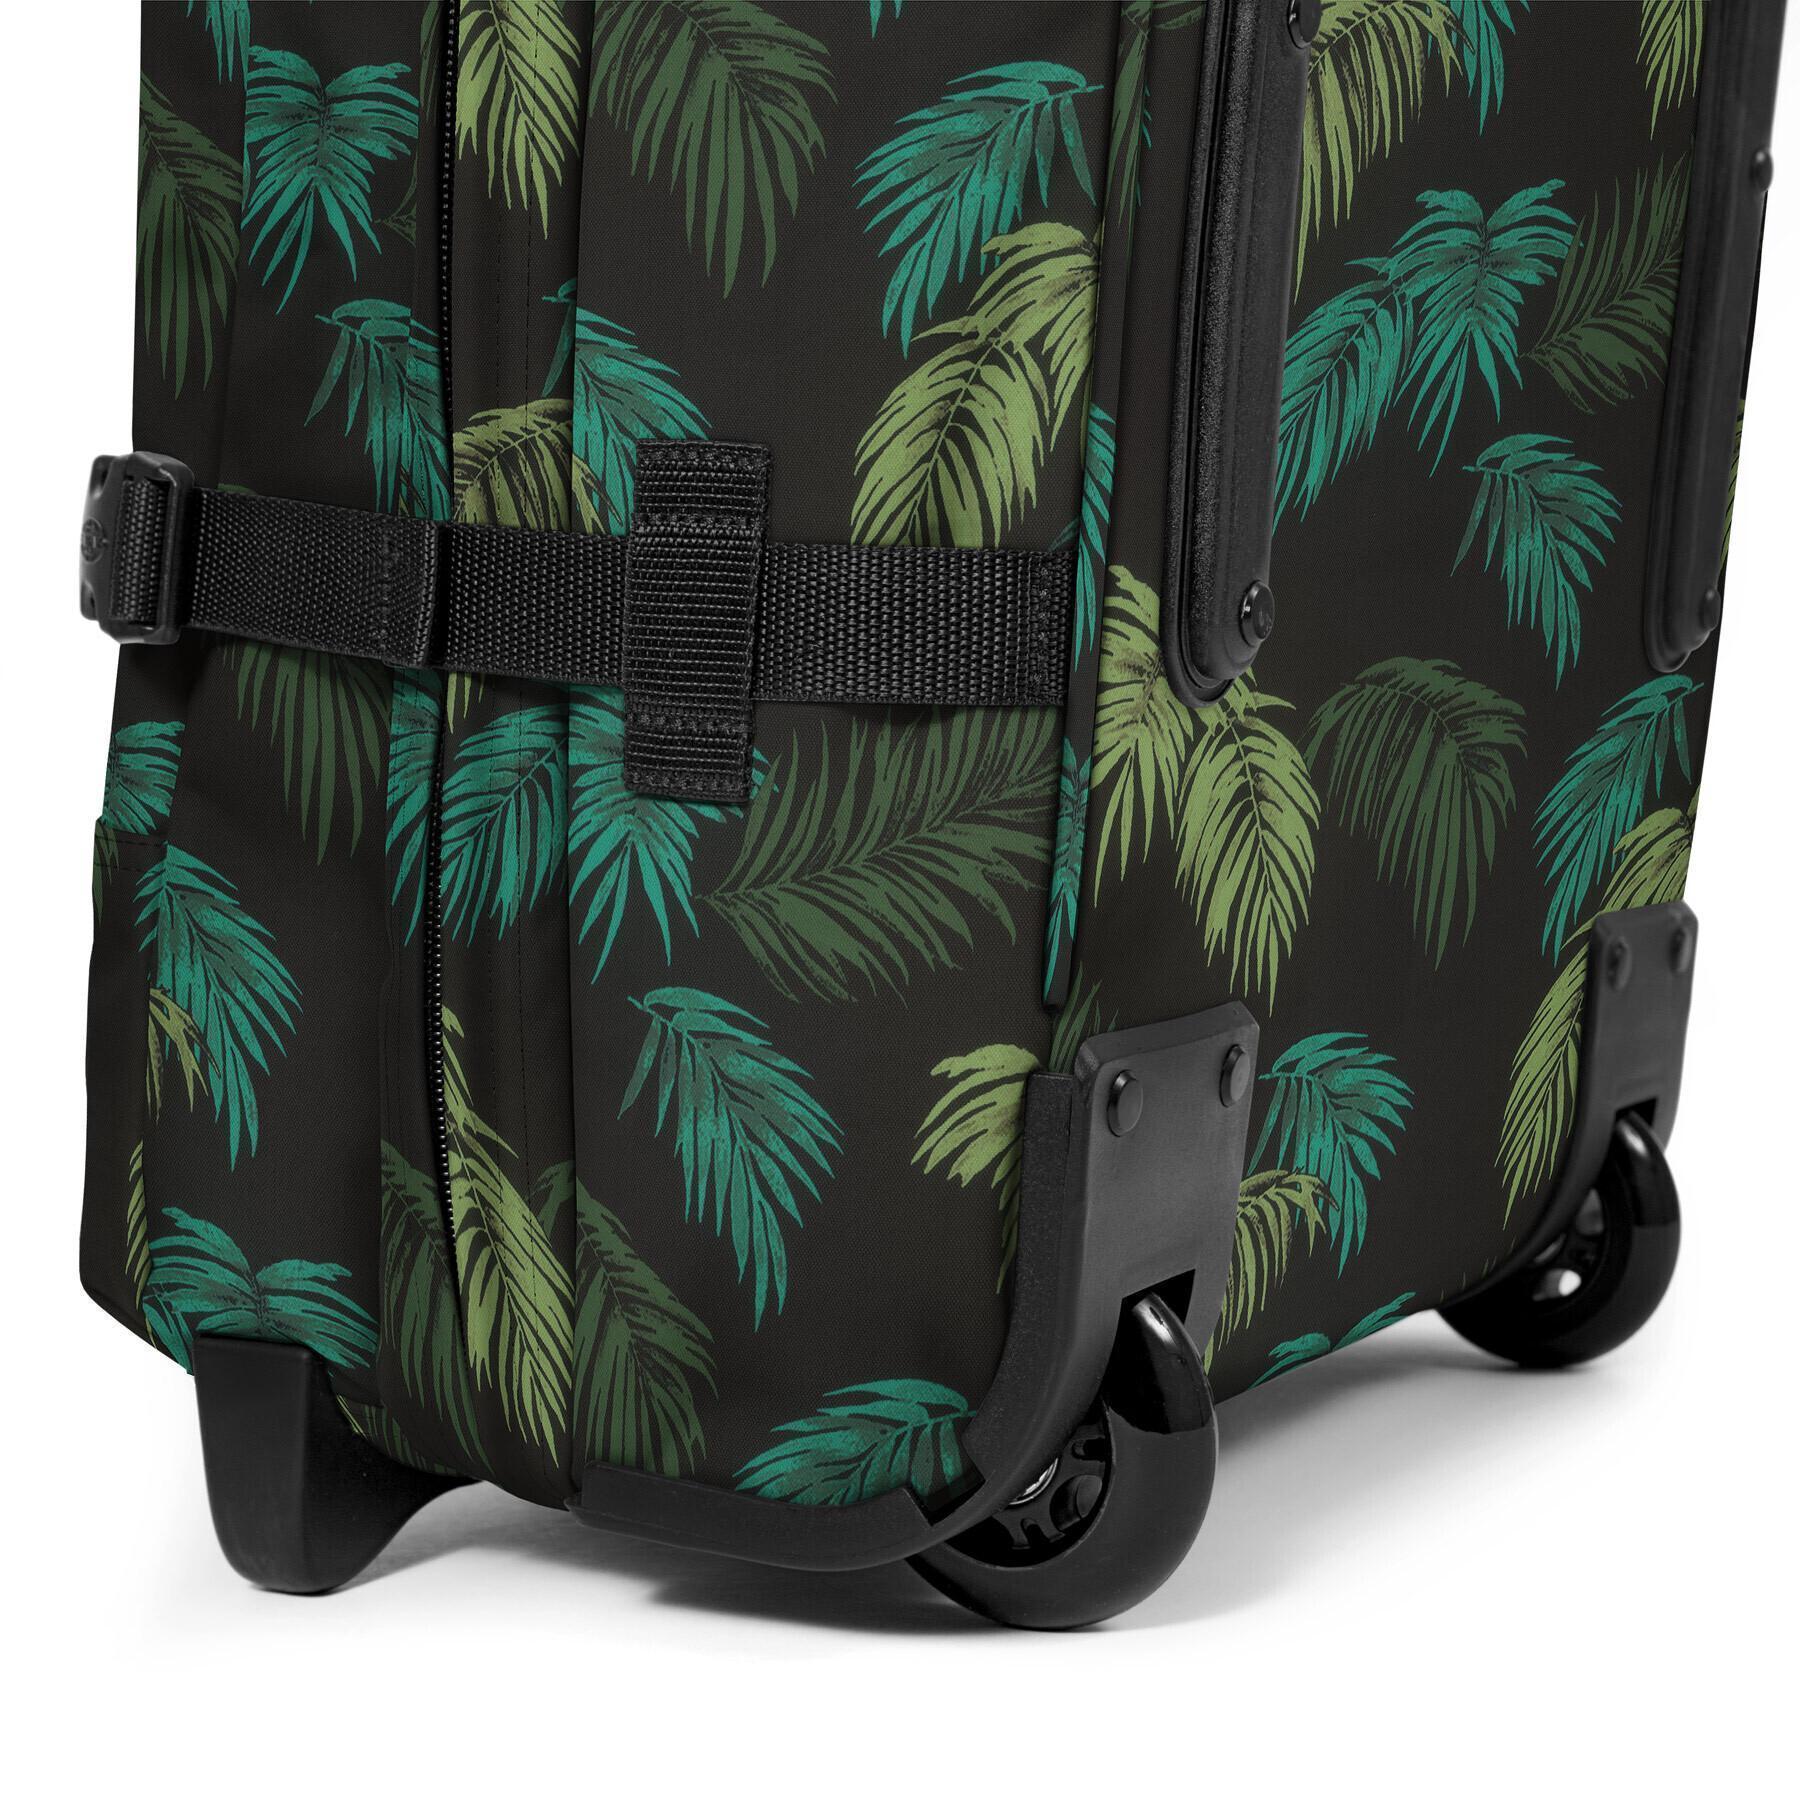 Suitcase Eastpak Tranverz L